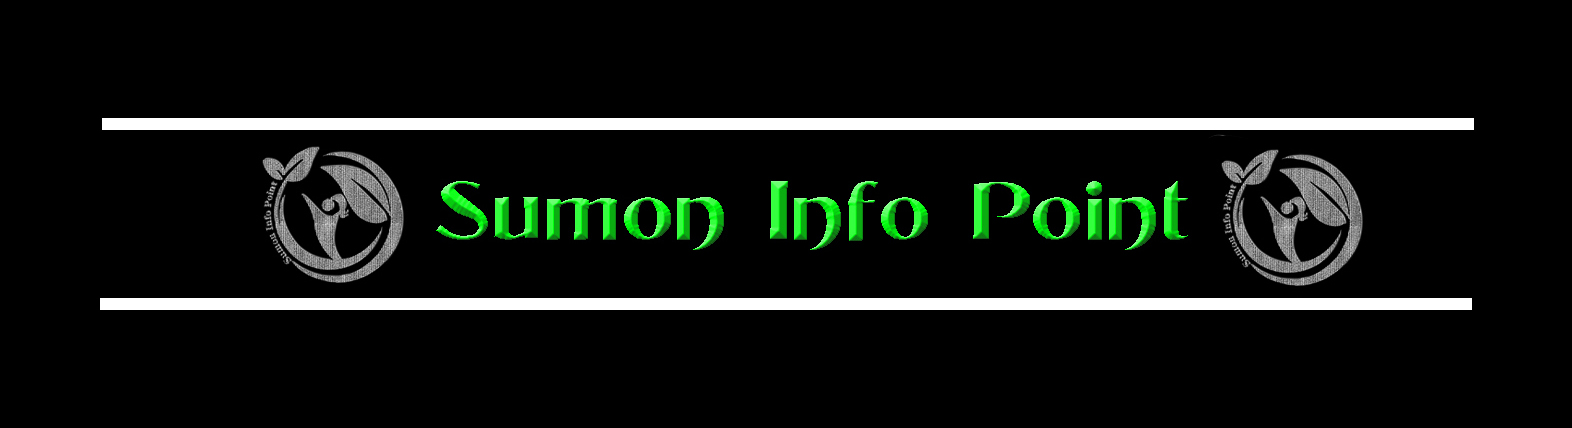 Sumon Info Point